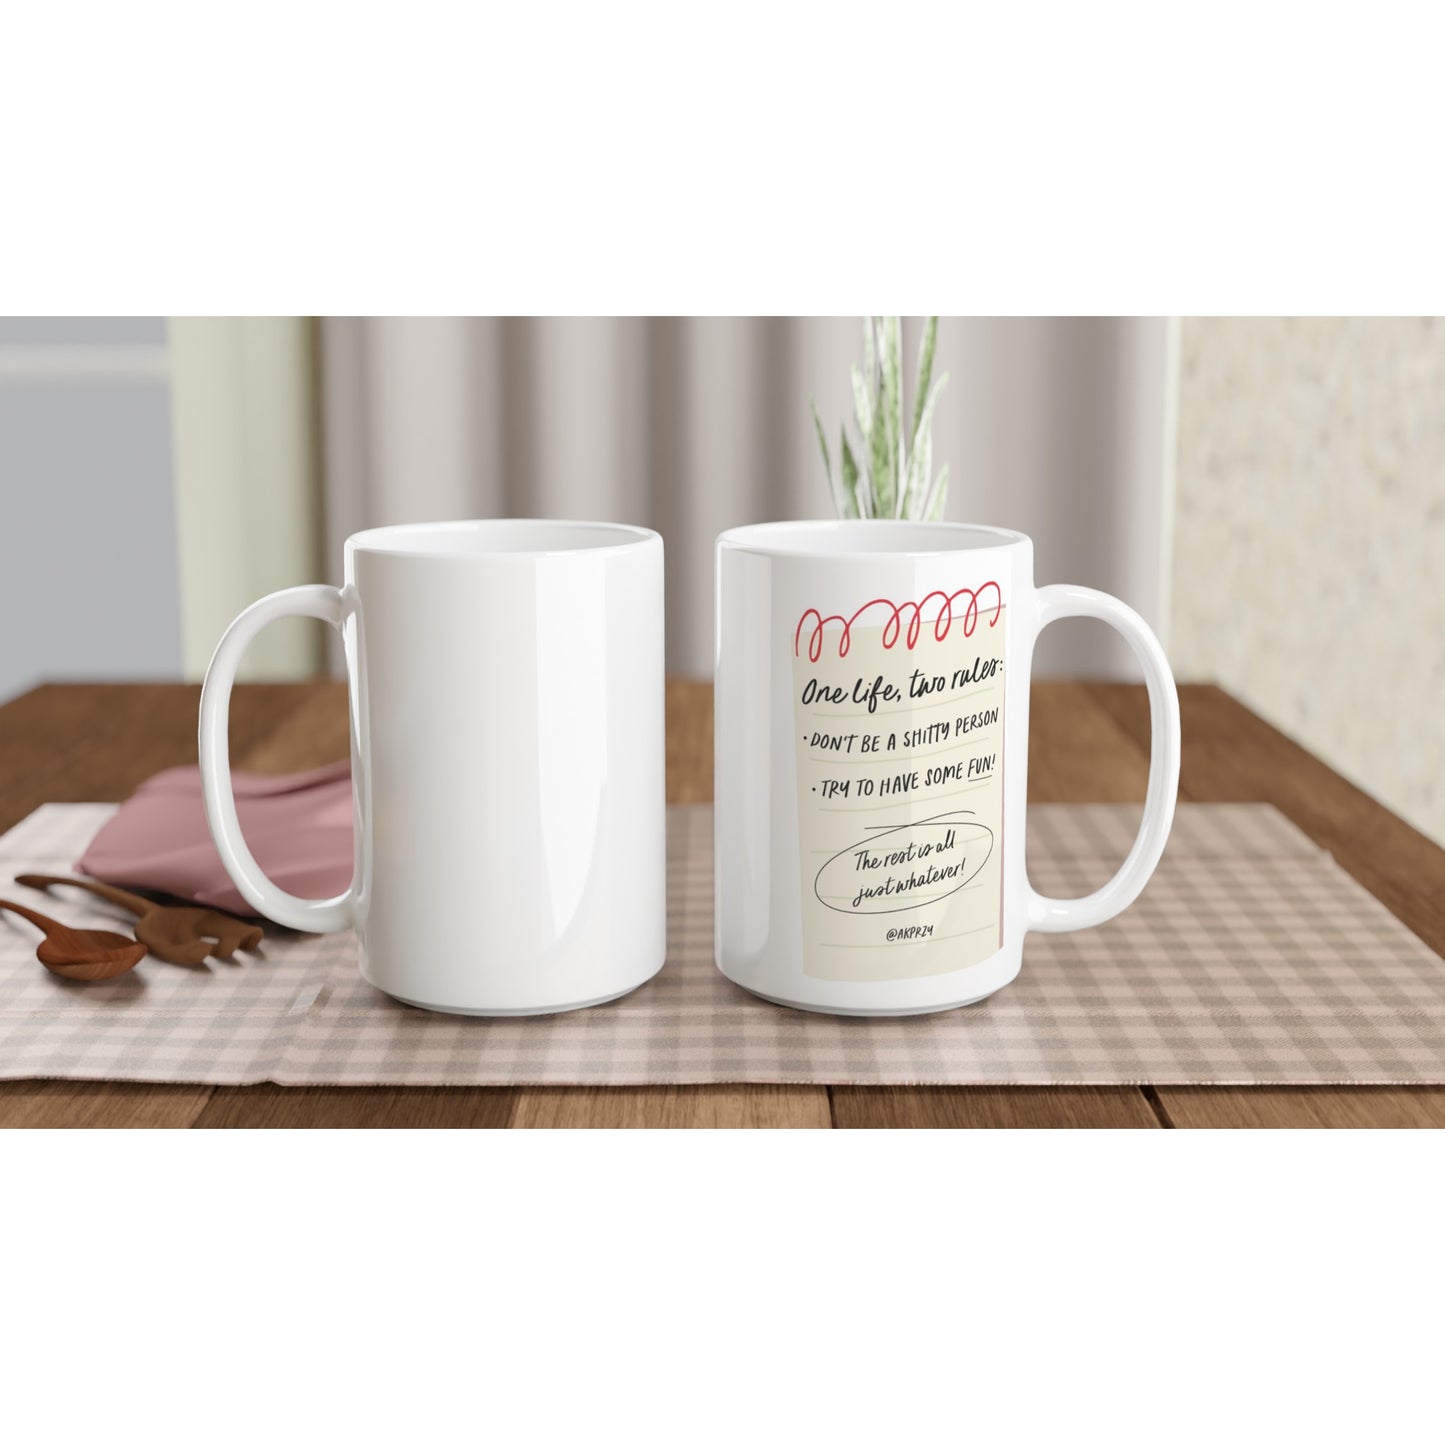 White 15oz Ceramic Mug - One life, Two rules